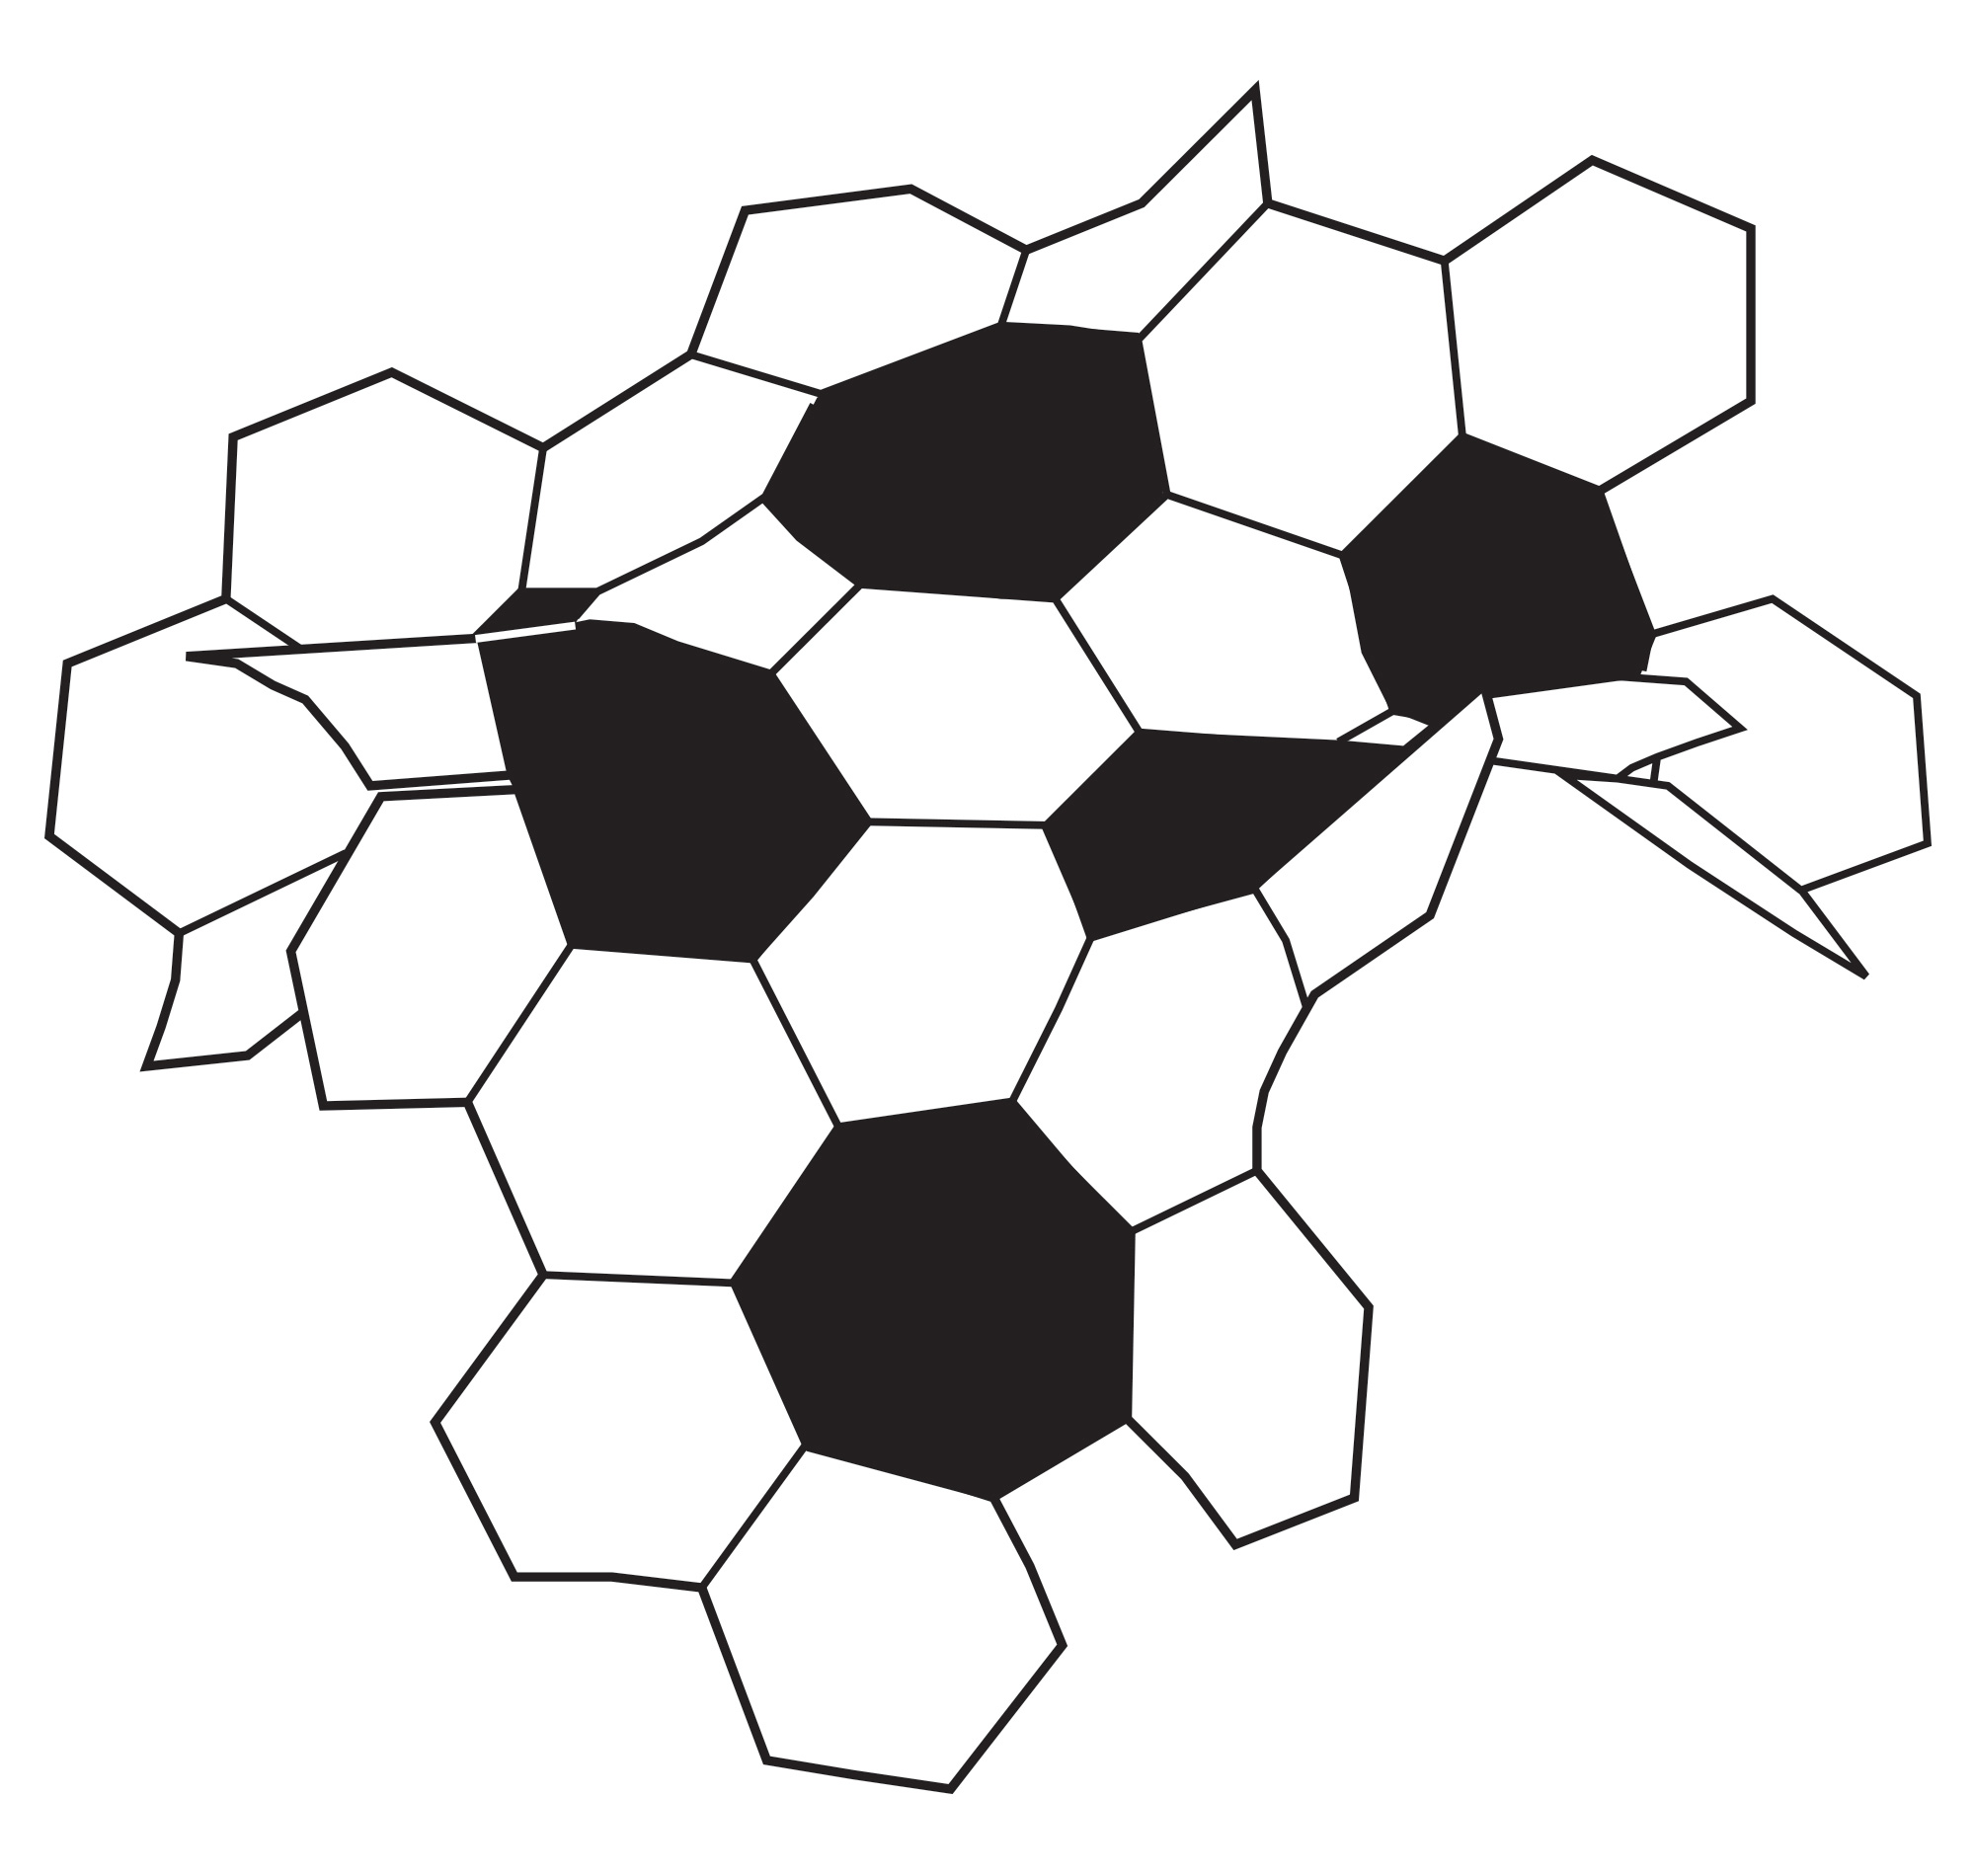 A diagram of a hyperbolic soccer ball.